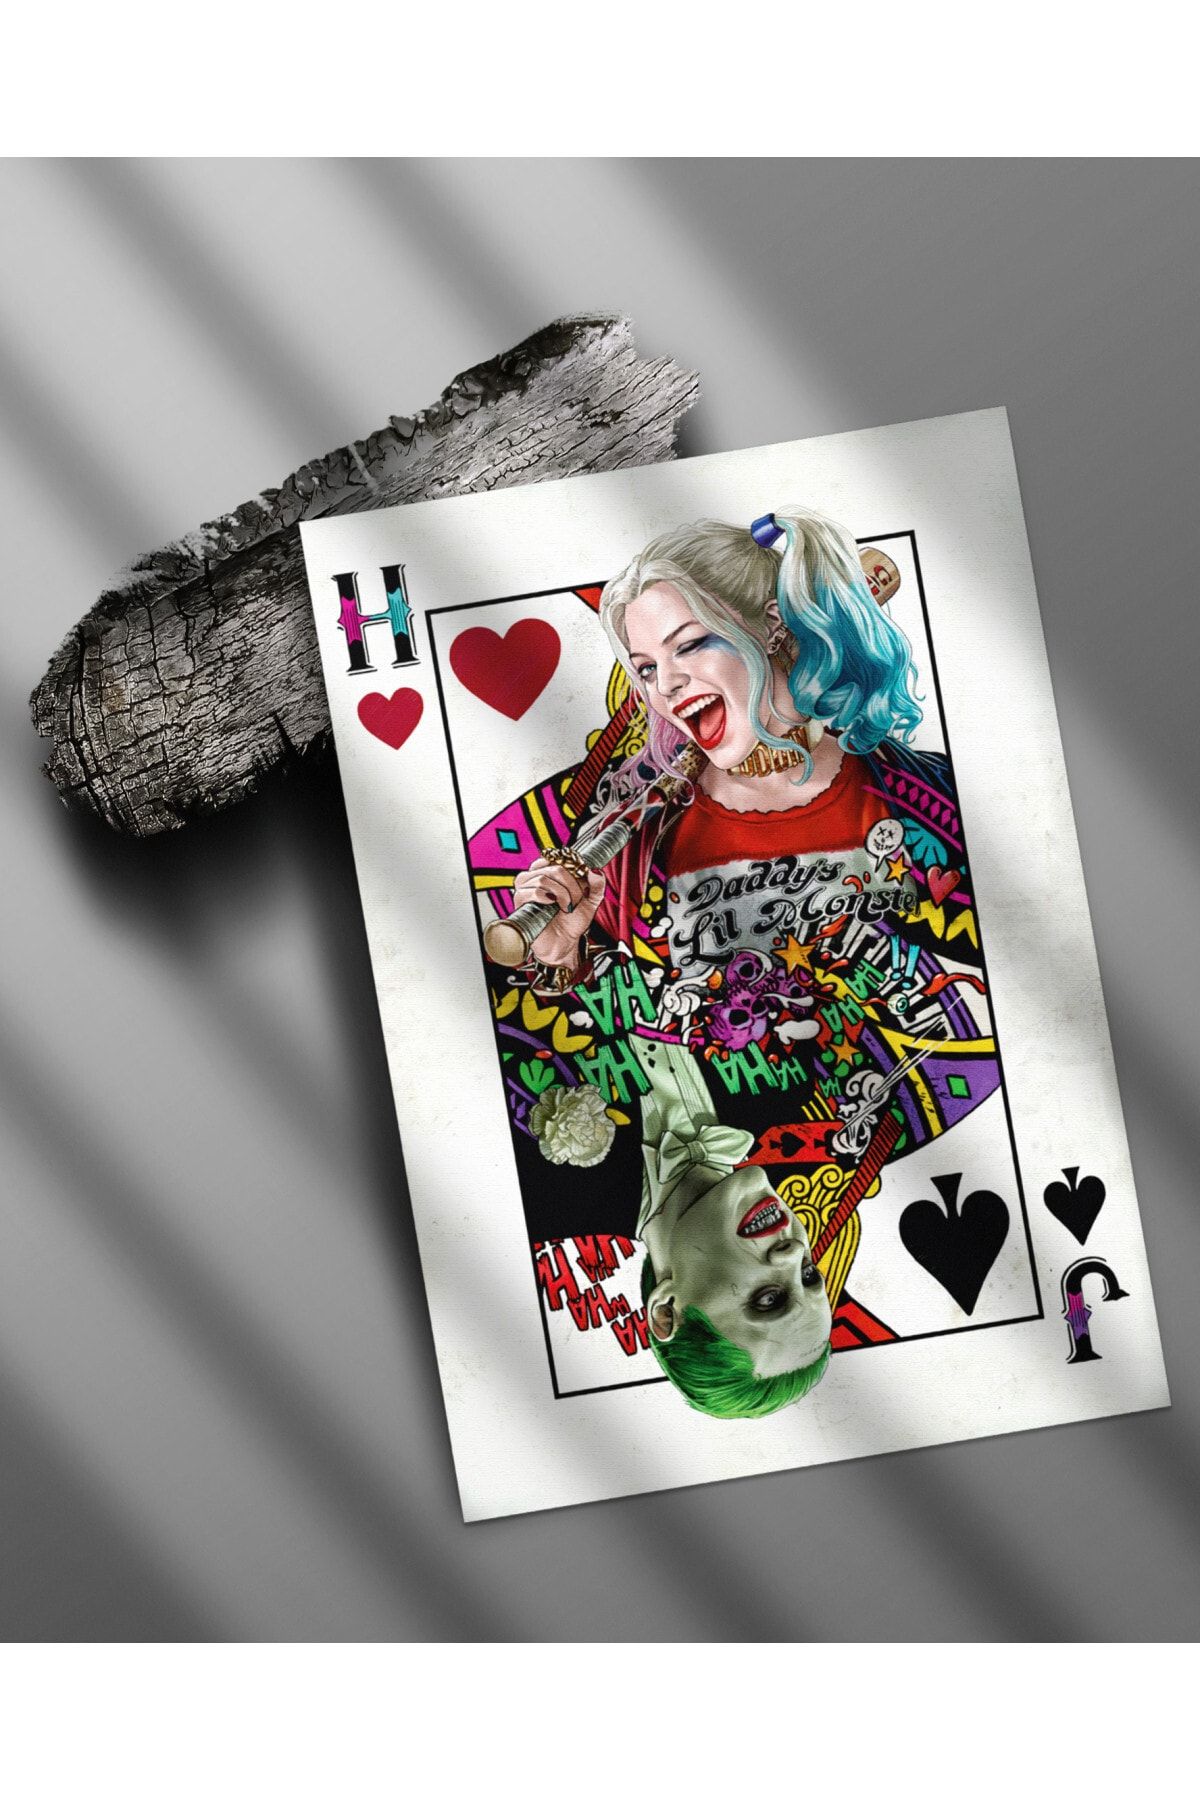 Denizposter Joker, Harley Quinn, Film Afişleri, Film Posteri, Film Kapak, Küçük Poster, Genç Odası Poster, 35x50